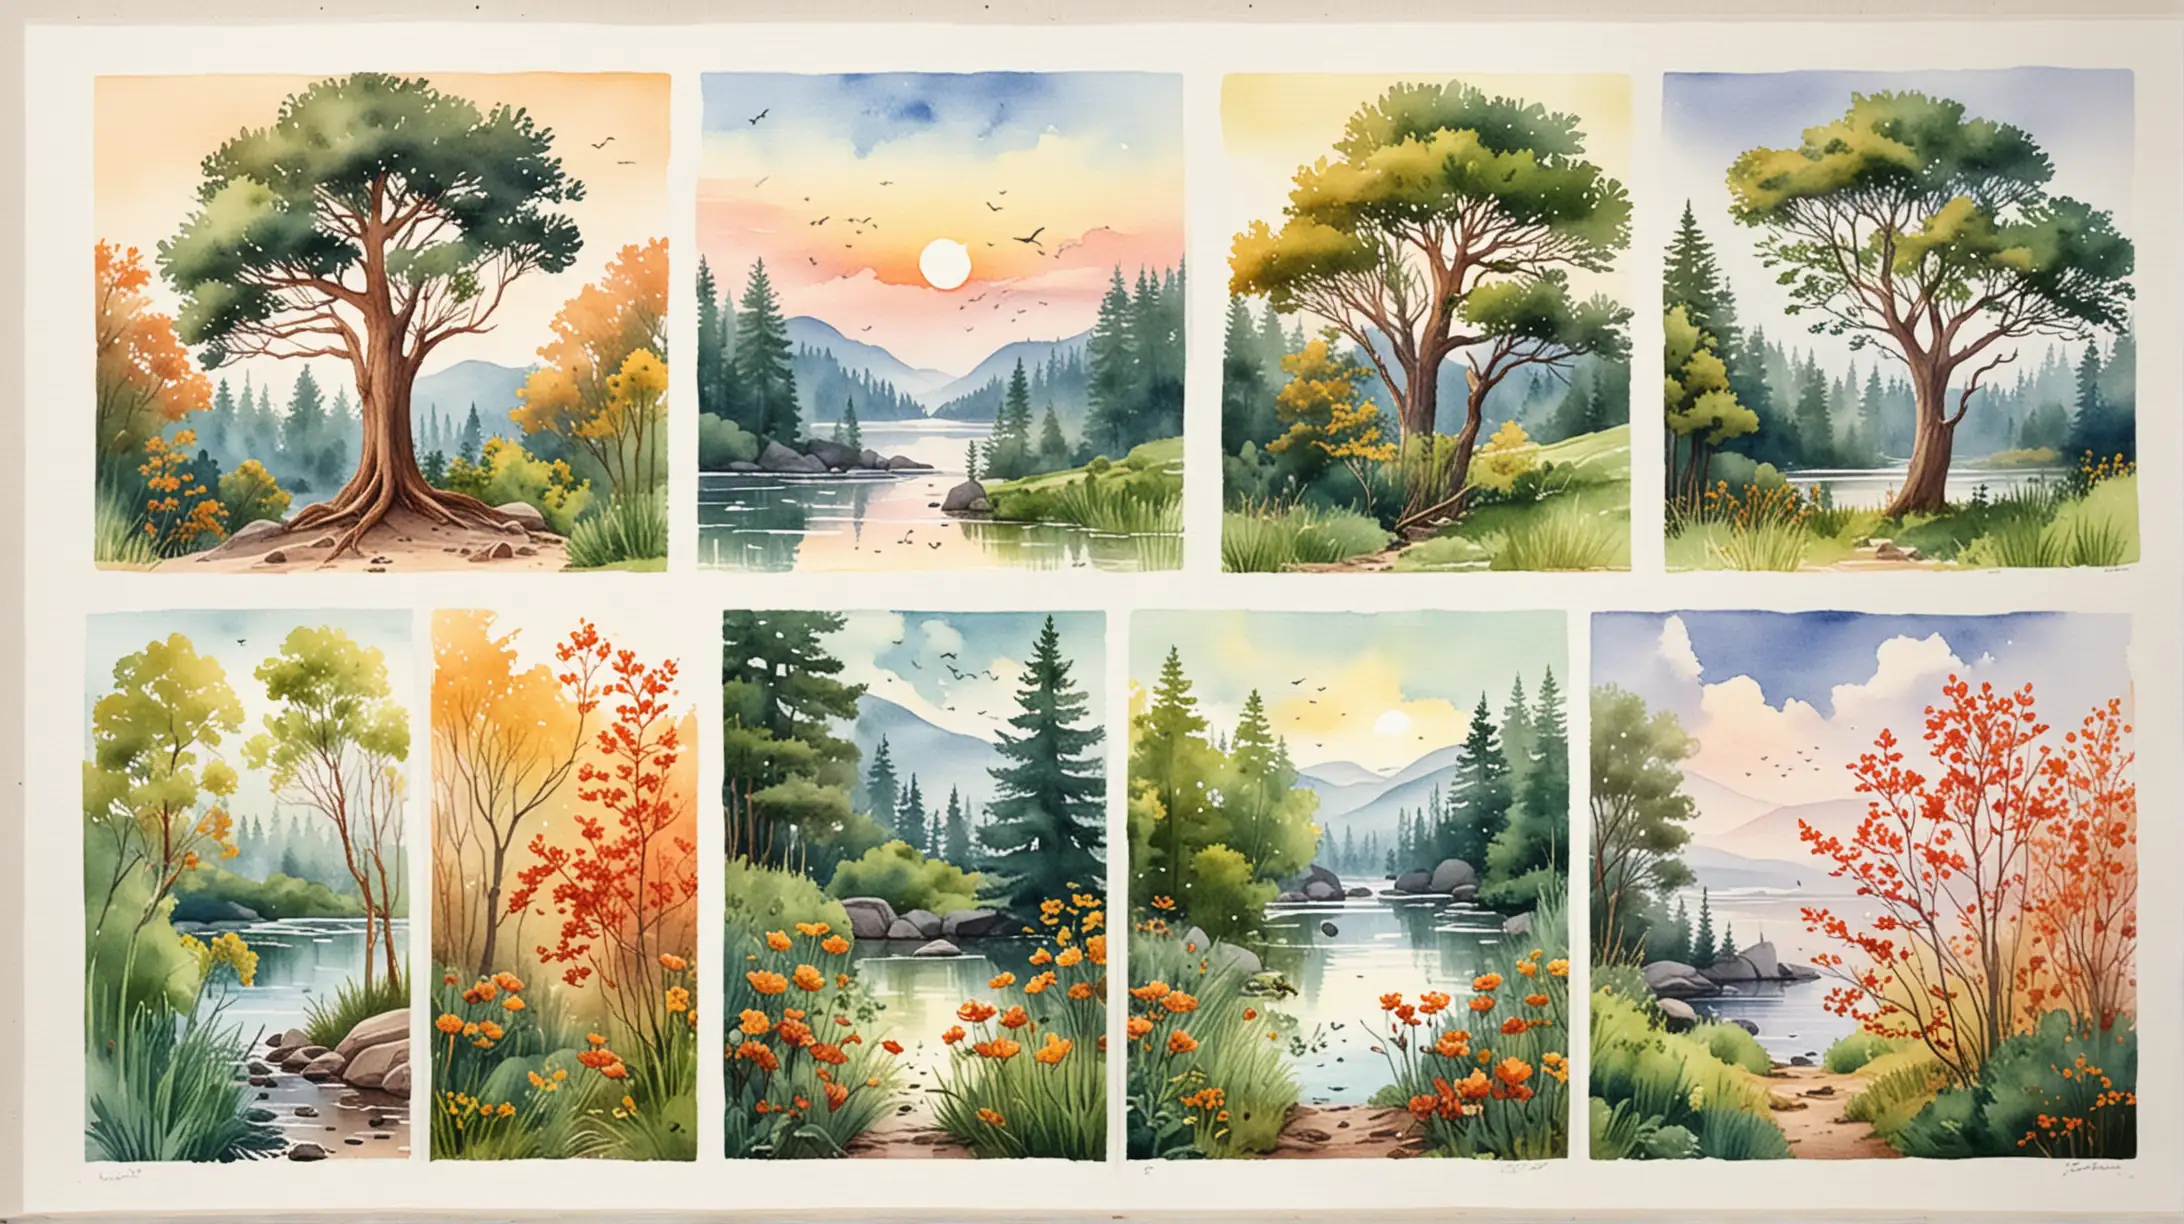 watercolor Nature scenes
